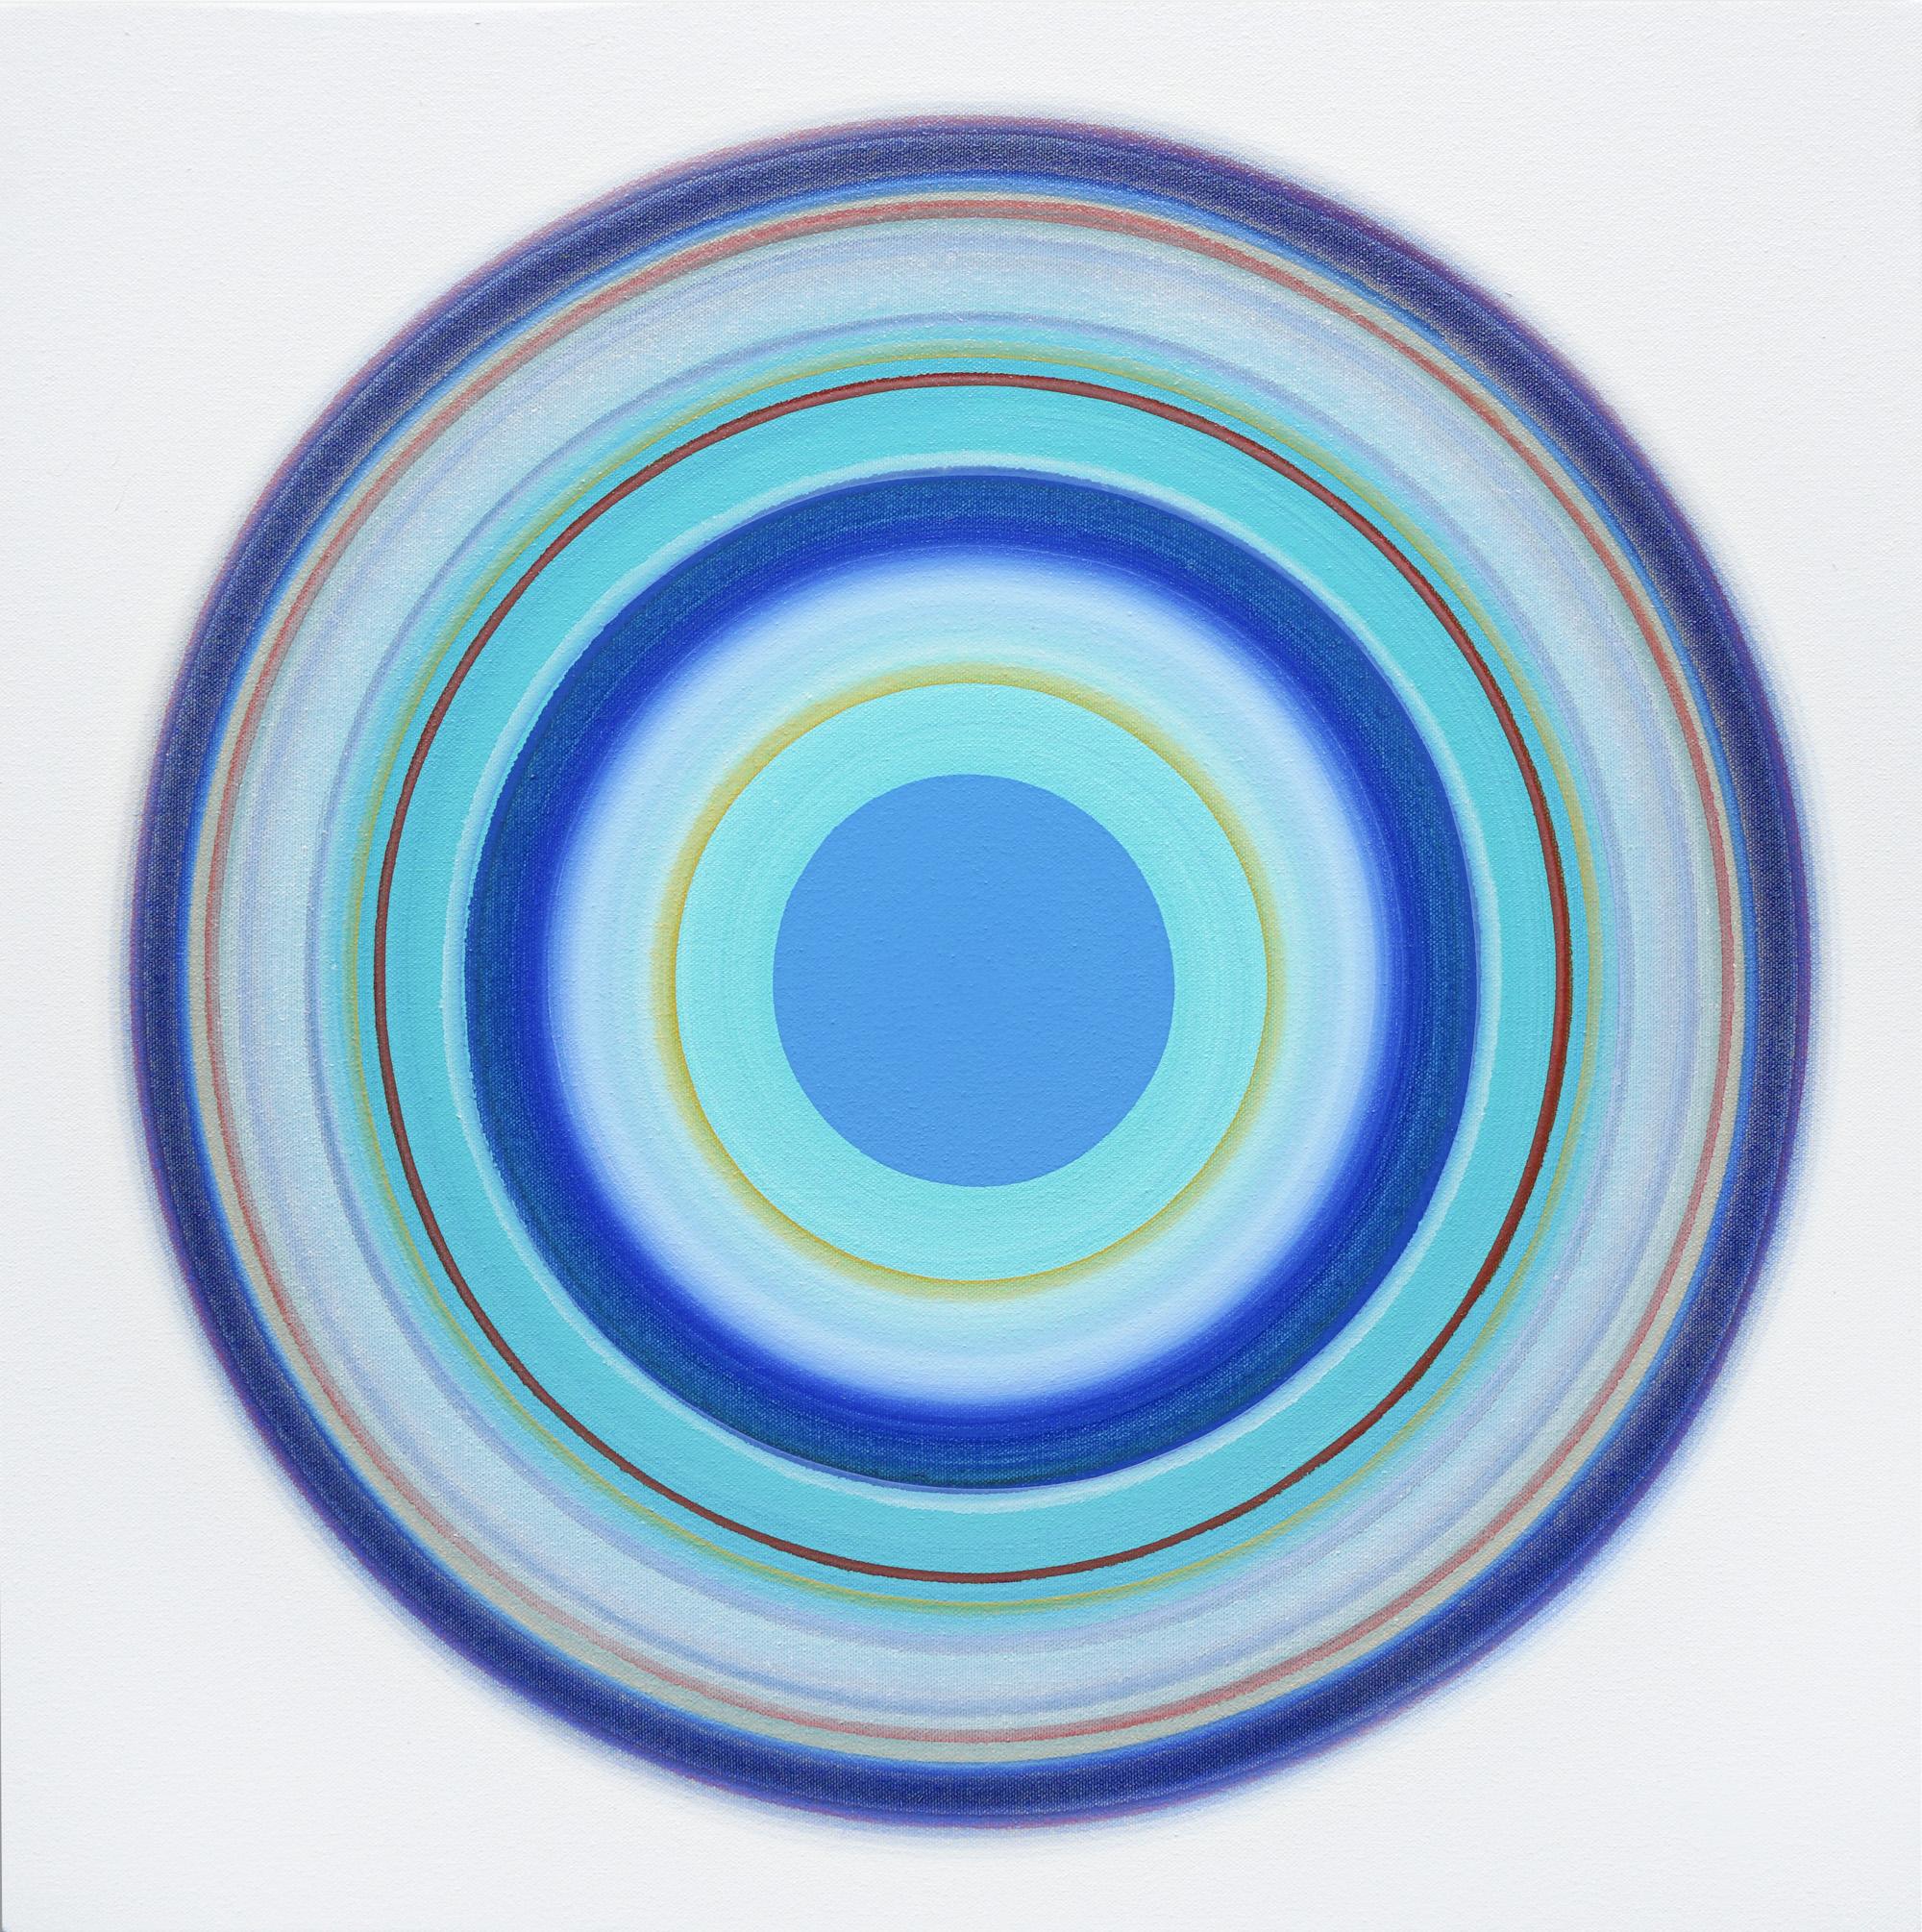 Abstract Painting Michael Hoffman - "Costa Del Sol VIII" Peinture cible lumineuse dans des teintes bleu Tranquil